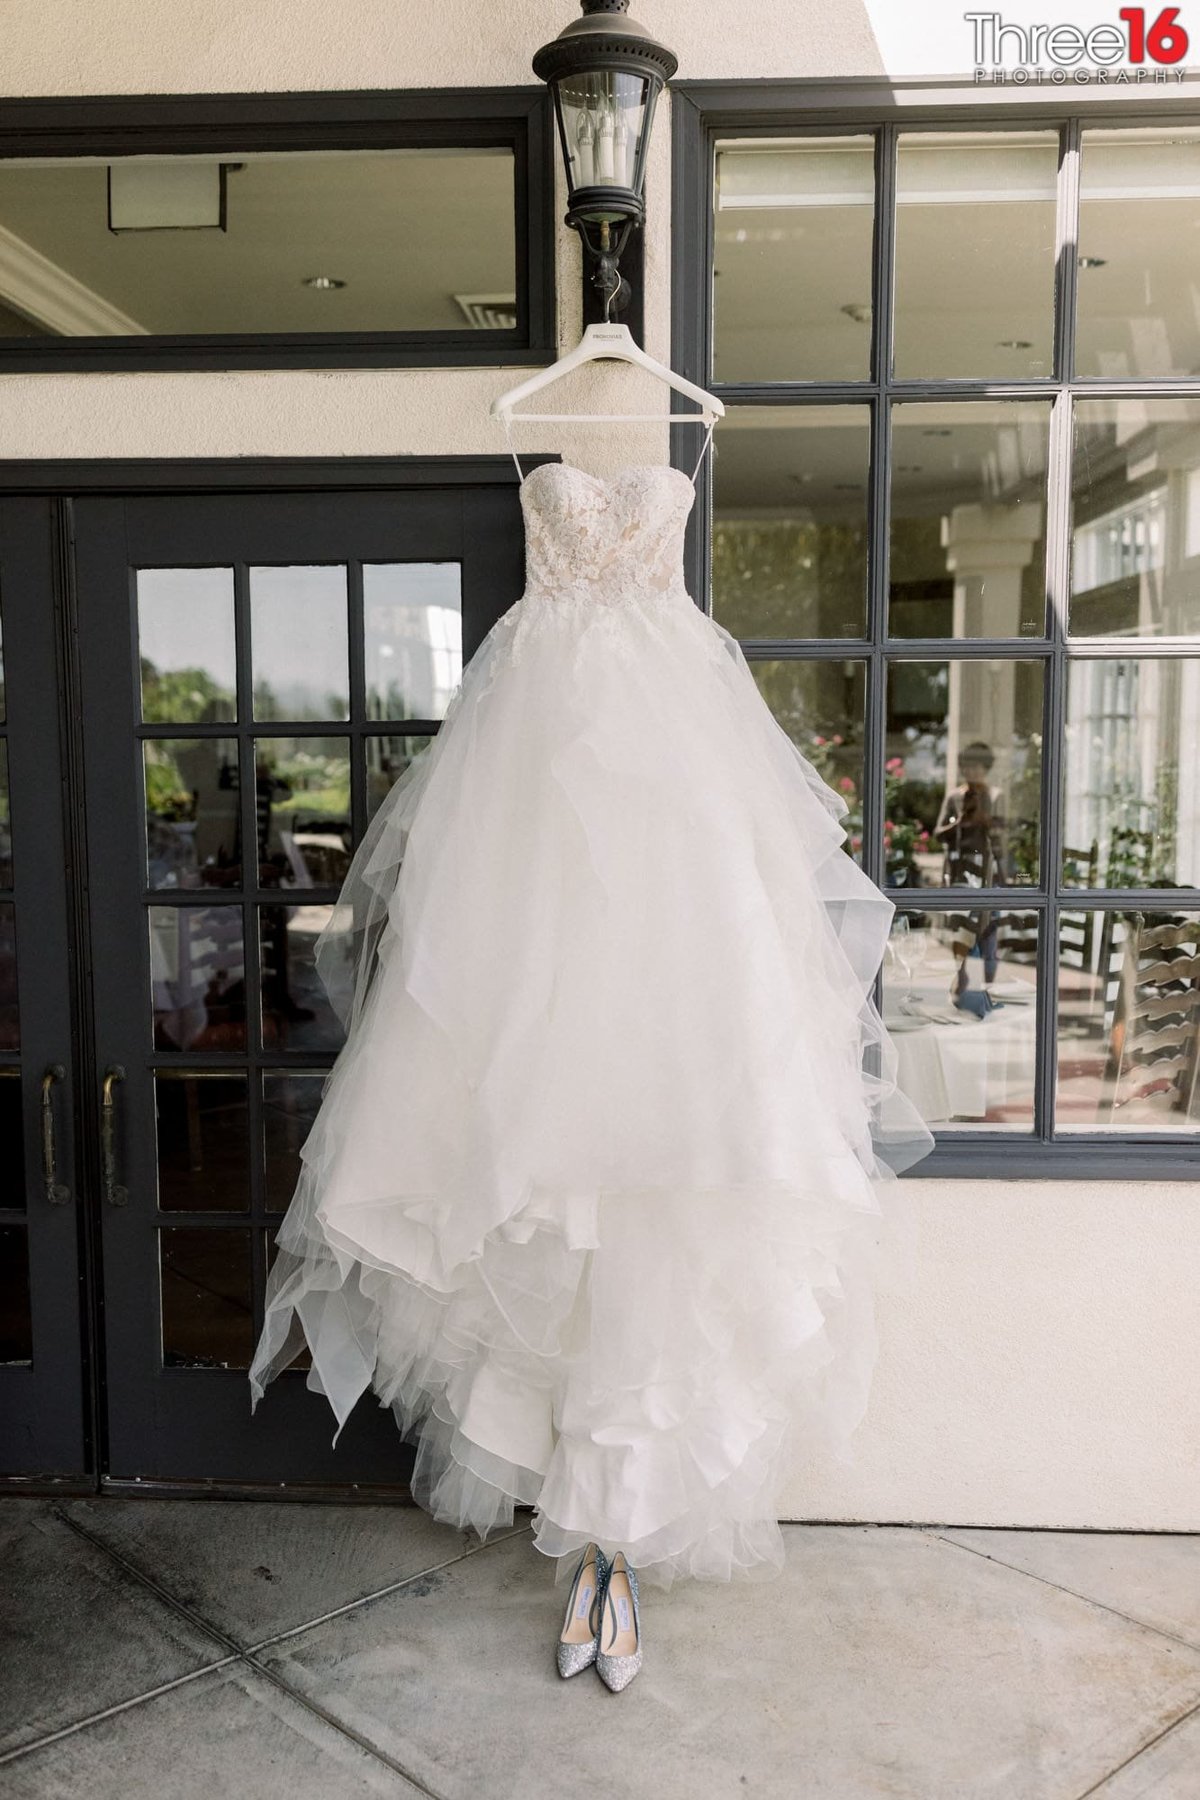 Bride's wedding dress hangs on display from a light fixture